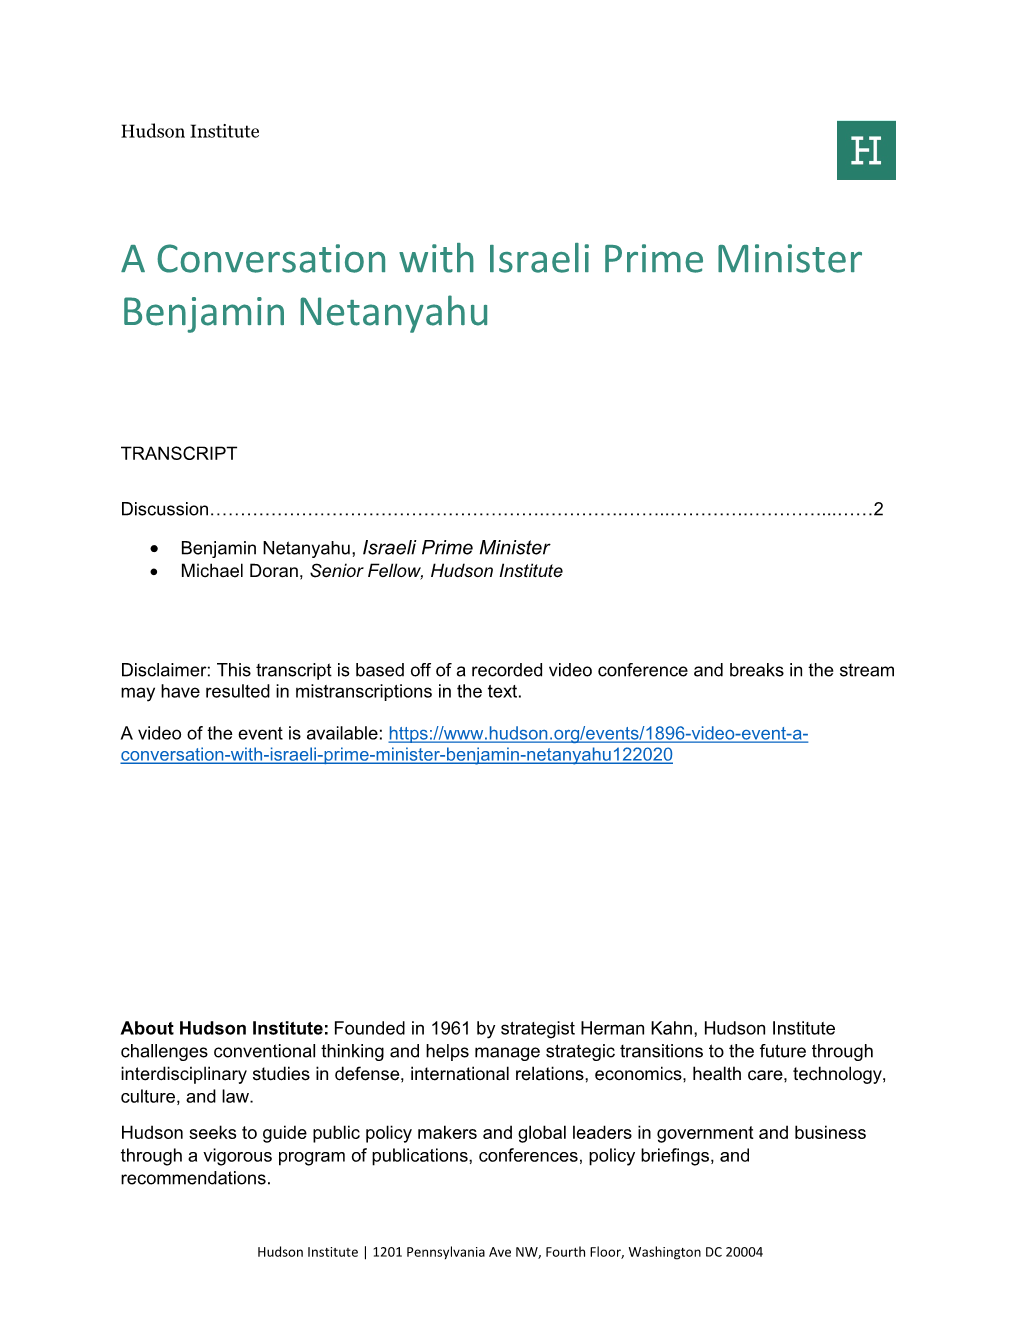 A Conversation with Israeli Prime Minister Benjamin Netanyahu